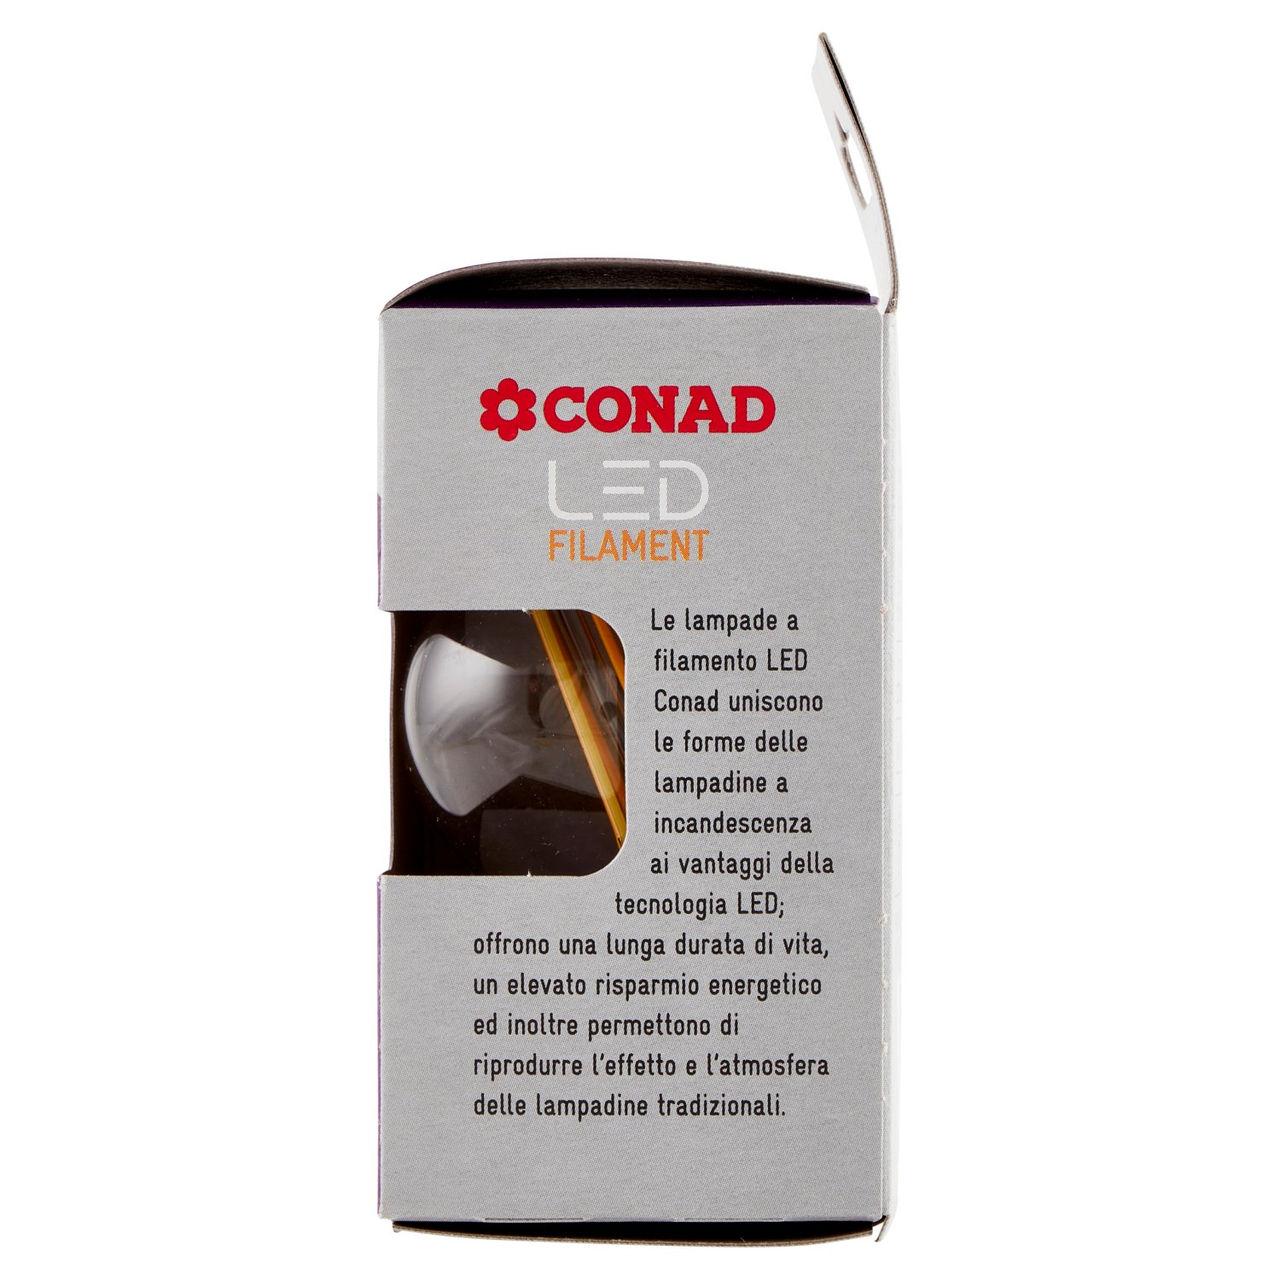 CONAD Led Filament 4.3W 470 Lumen E14 Luce Calda